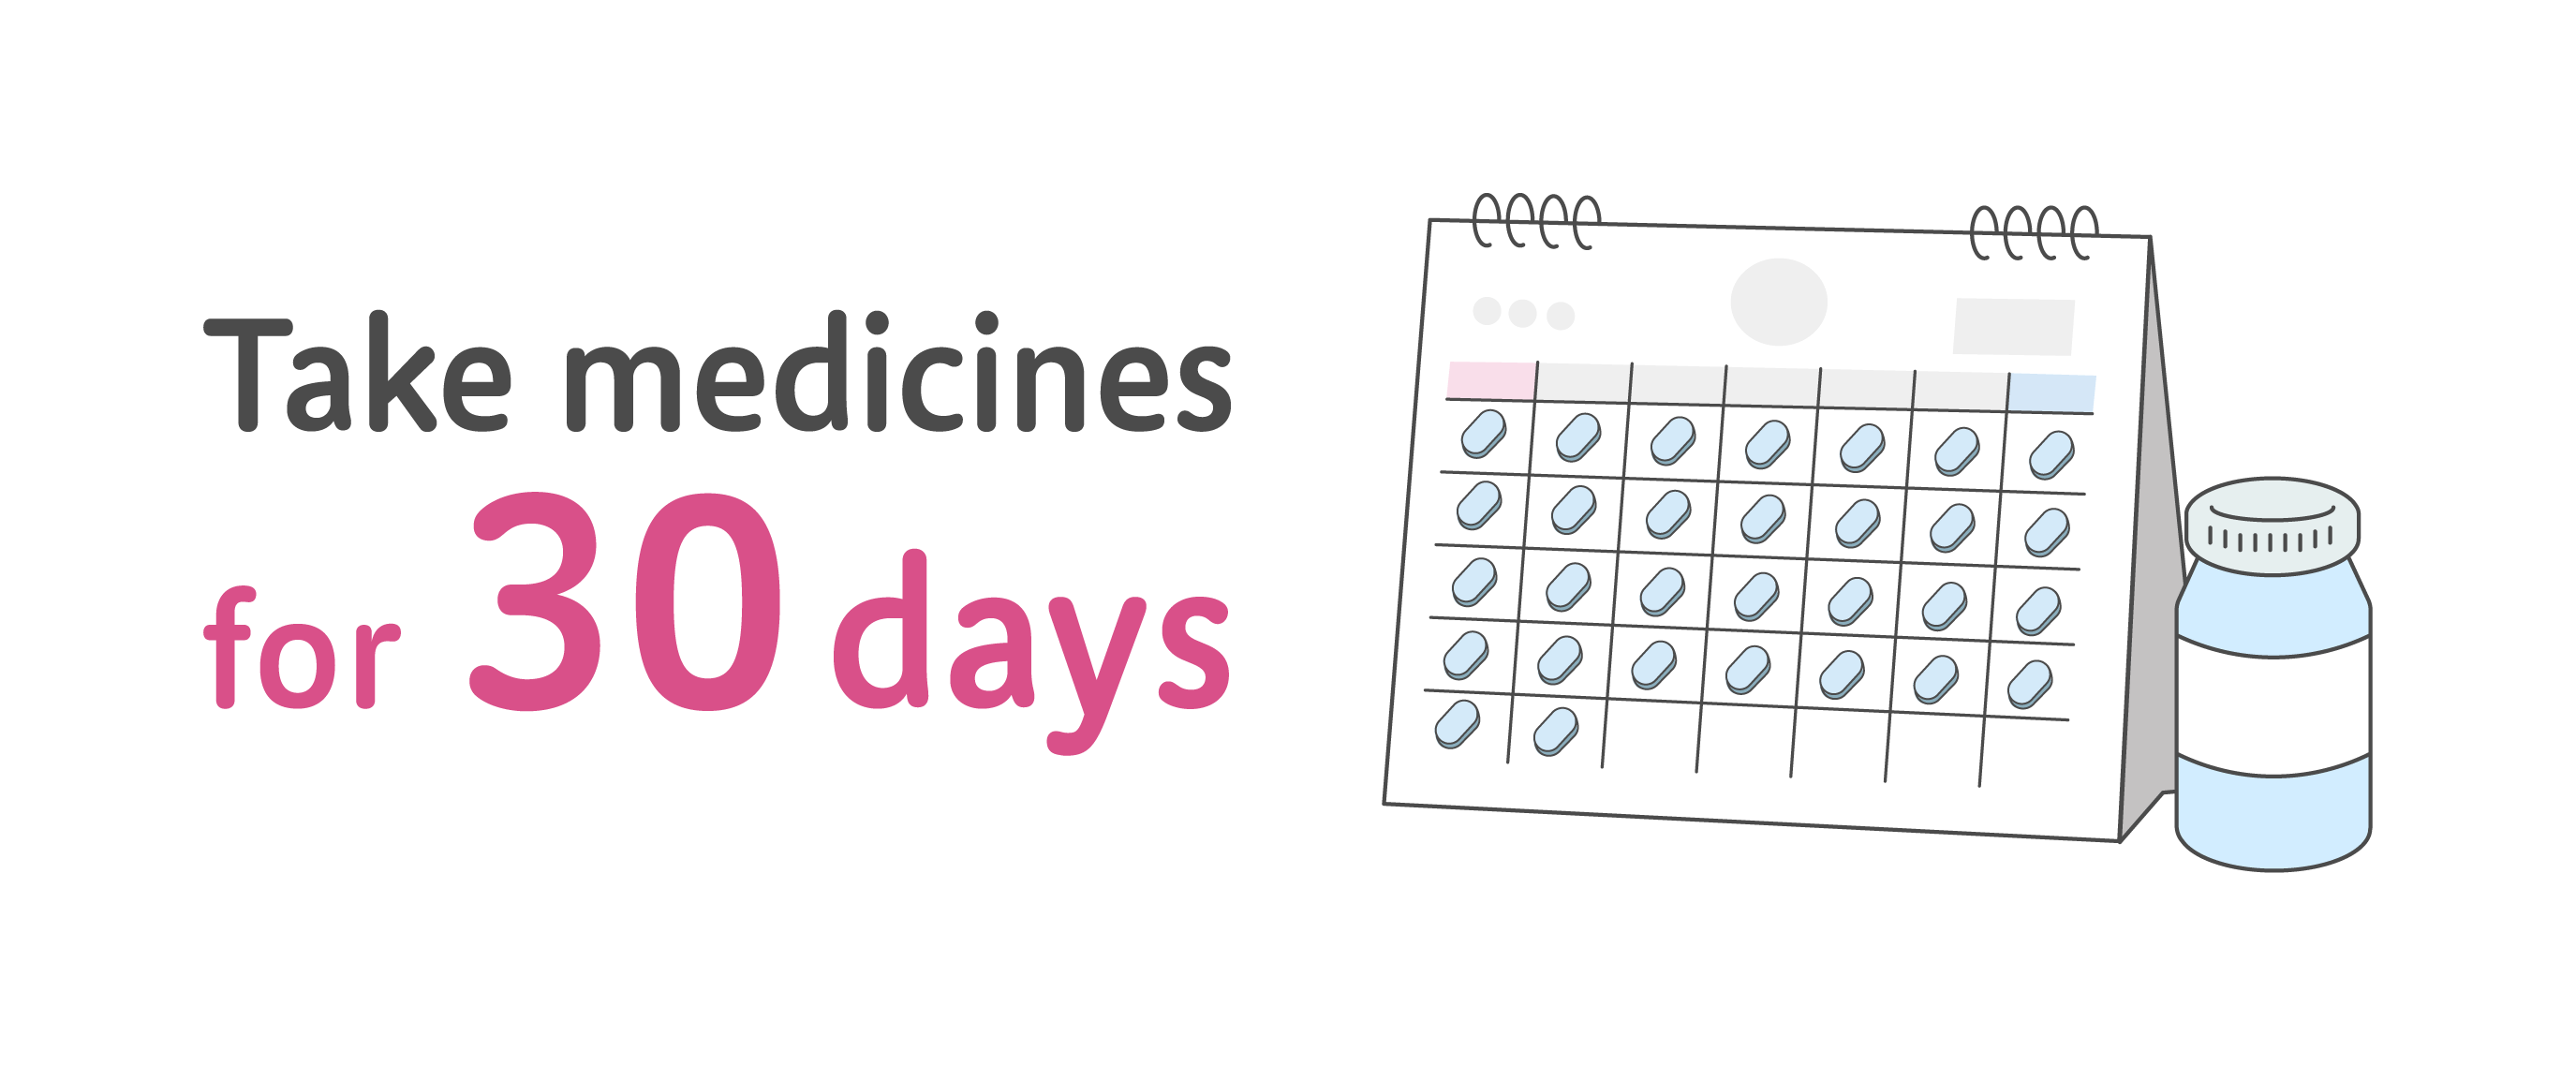 Take medicines for 30 days